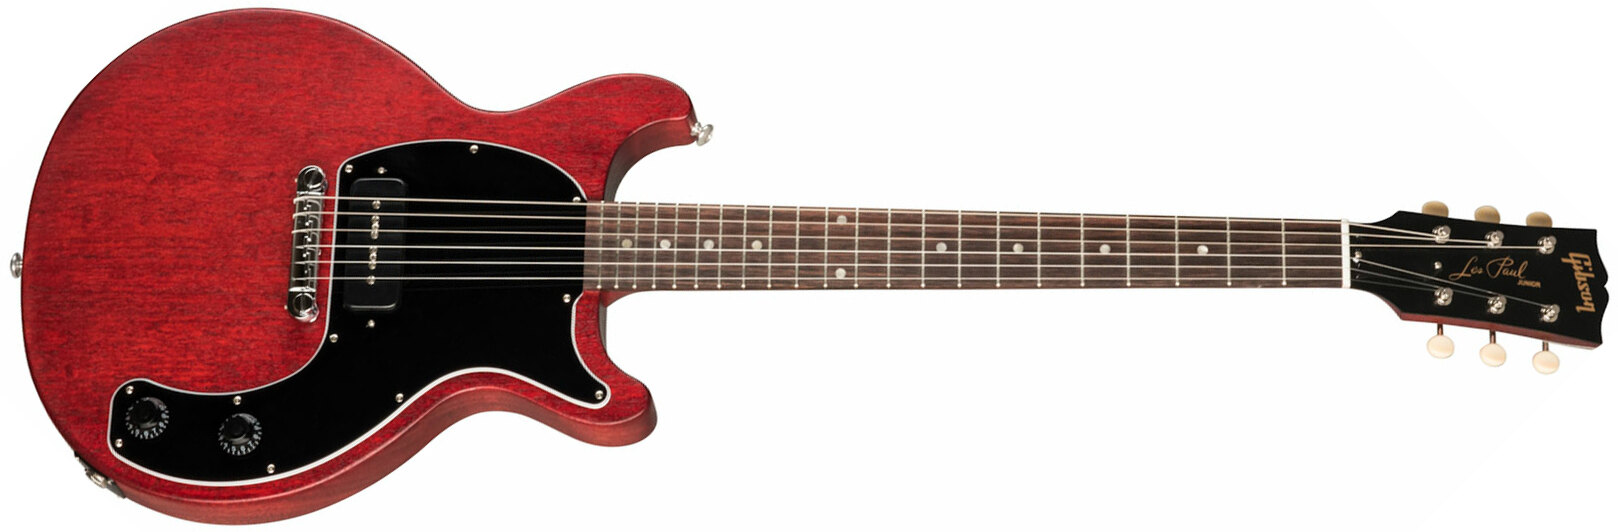 Gibson Les Paul Junior Tribute Dc Modern P90 - Worn Cherry - Double cut electric guitar - Main picture